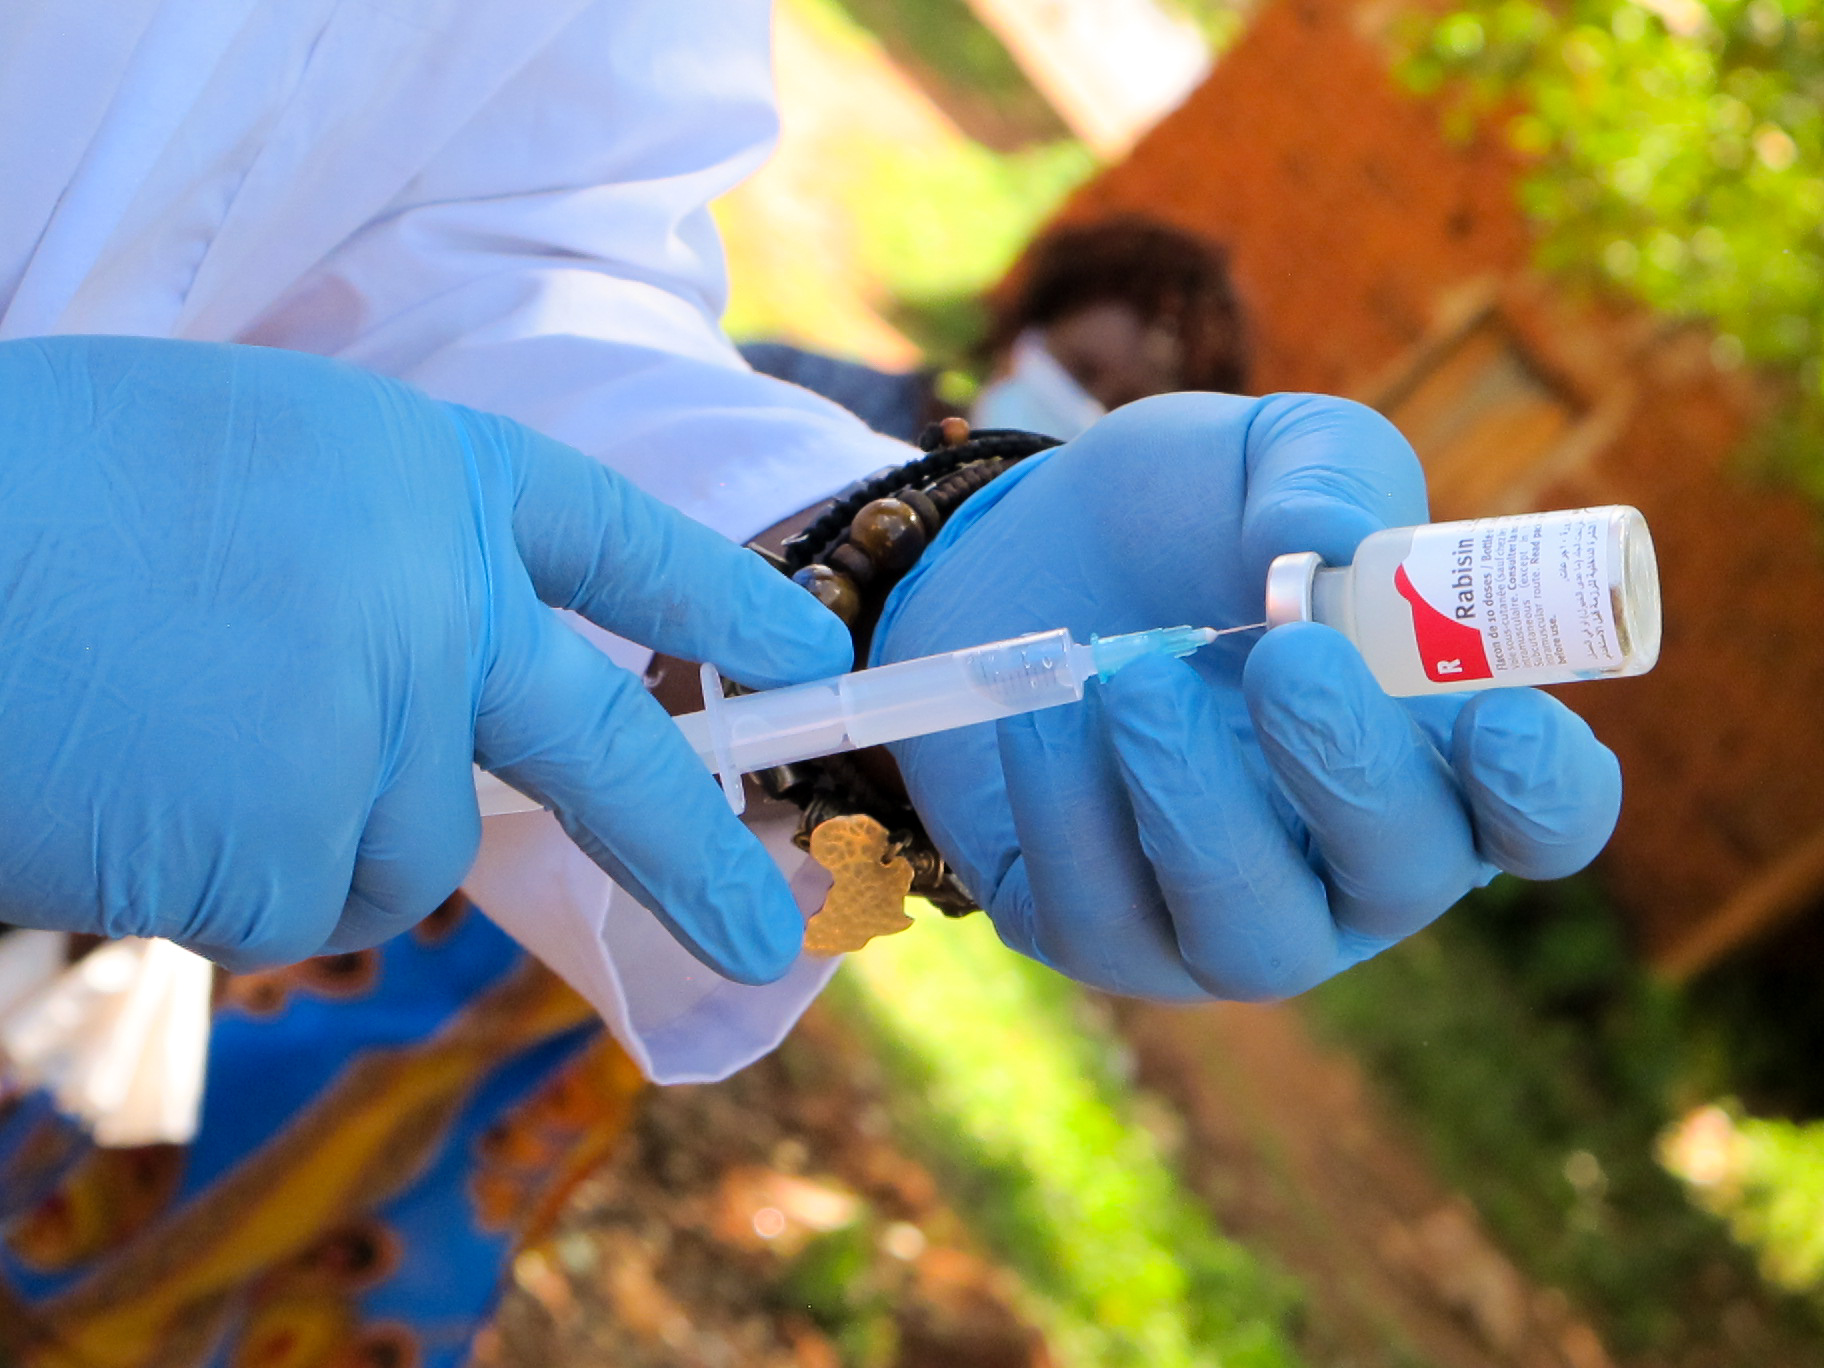 Rabies vaccine being prepared by gloved hands